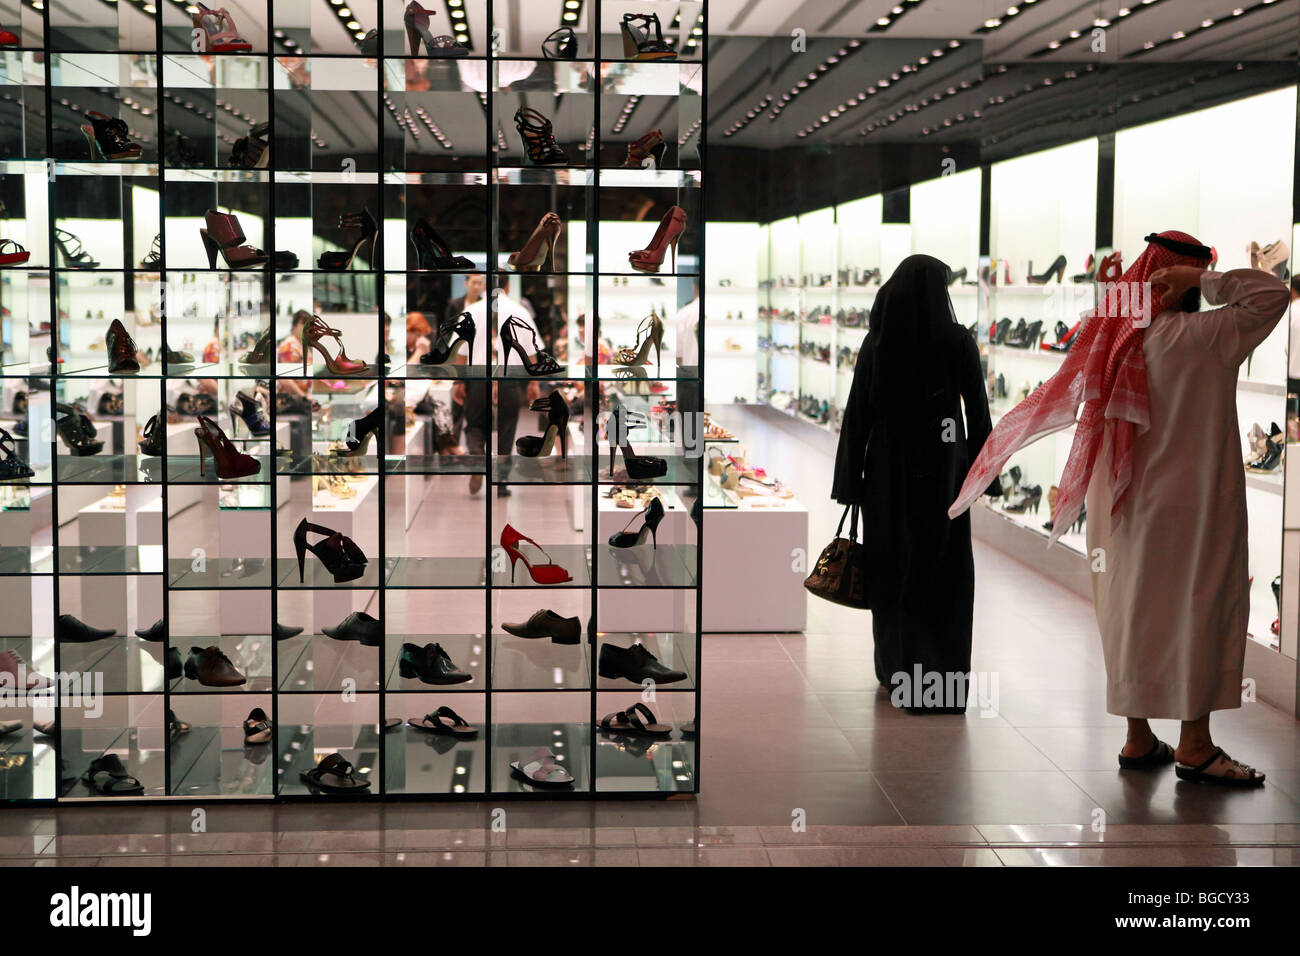 A shoeshop in the Mall of Dubai, United Arab Emirates Stock Photo